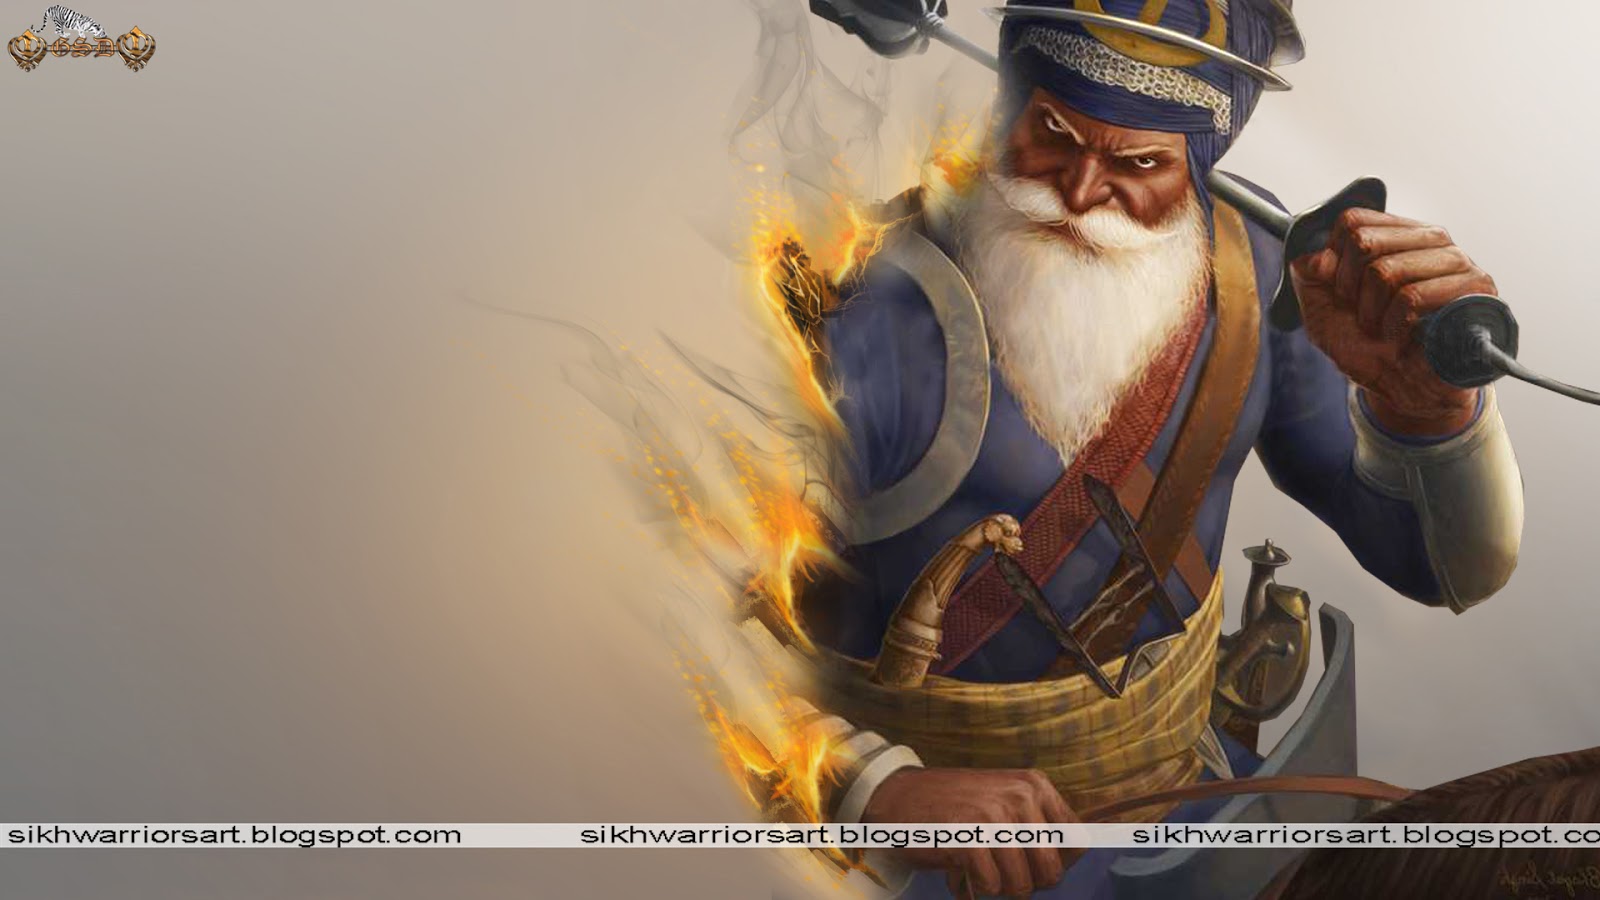 sikh warrior wallpaper,facial hair,beard,screenshot,illustration,photography